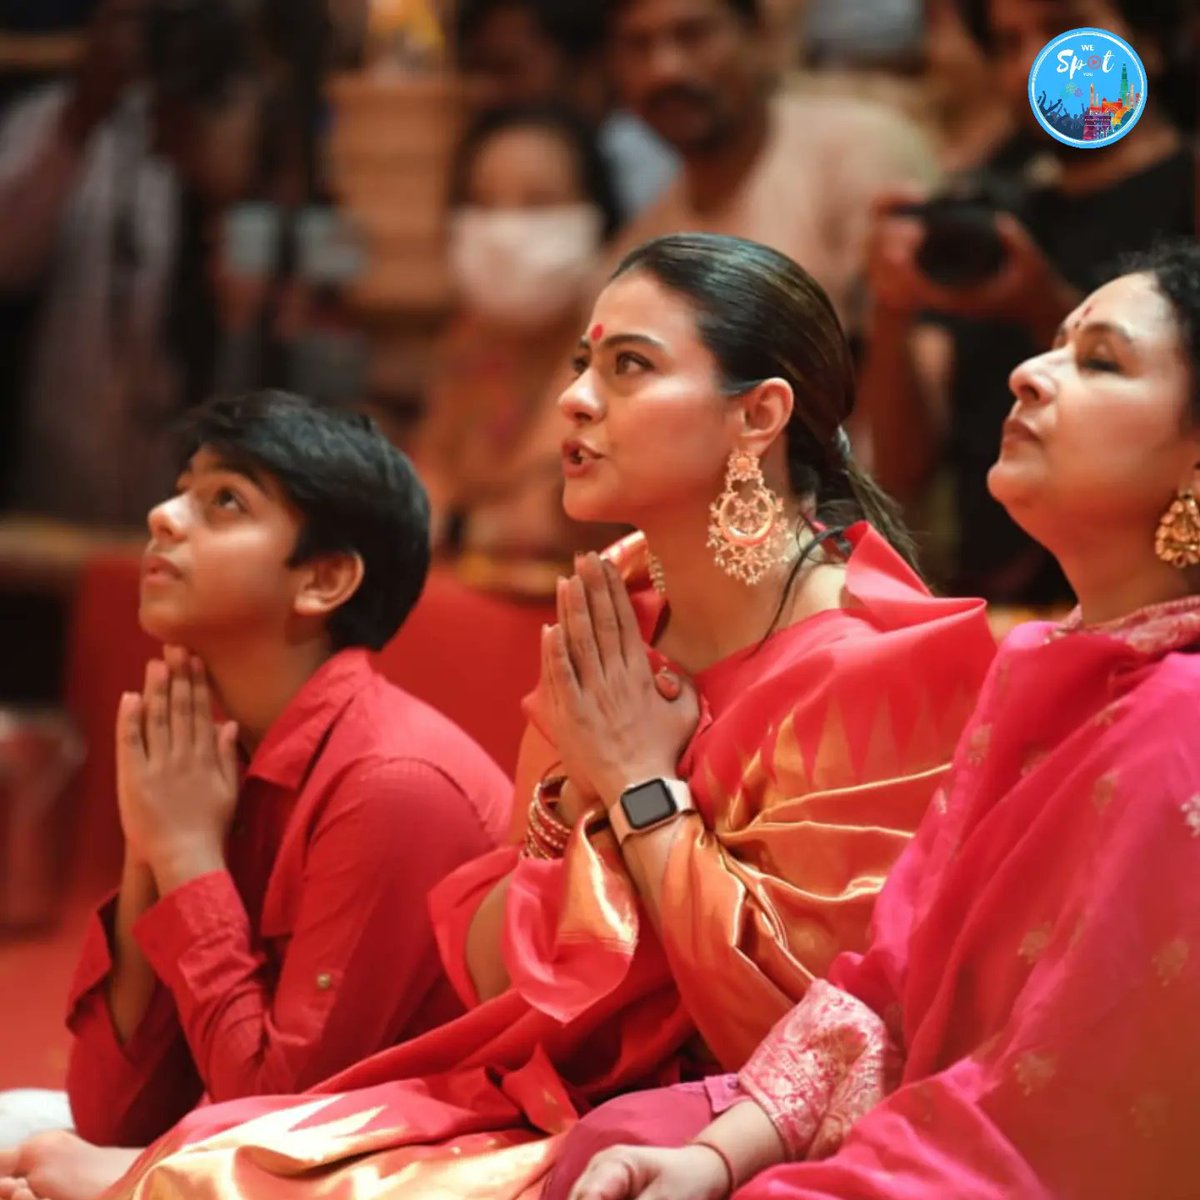 Actresses Kajol along with her mother and sister are seen celebrating Durga Puja ❤️

#kajol #ranimukerji #tanishamukherjee #tanishamukherji #tanuja #sumana #wespotyou #wespotyoubollywood #mumbai #durgamaa #durgapujaspecial #durgapuja2022 #madurga